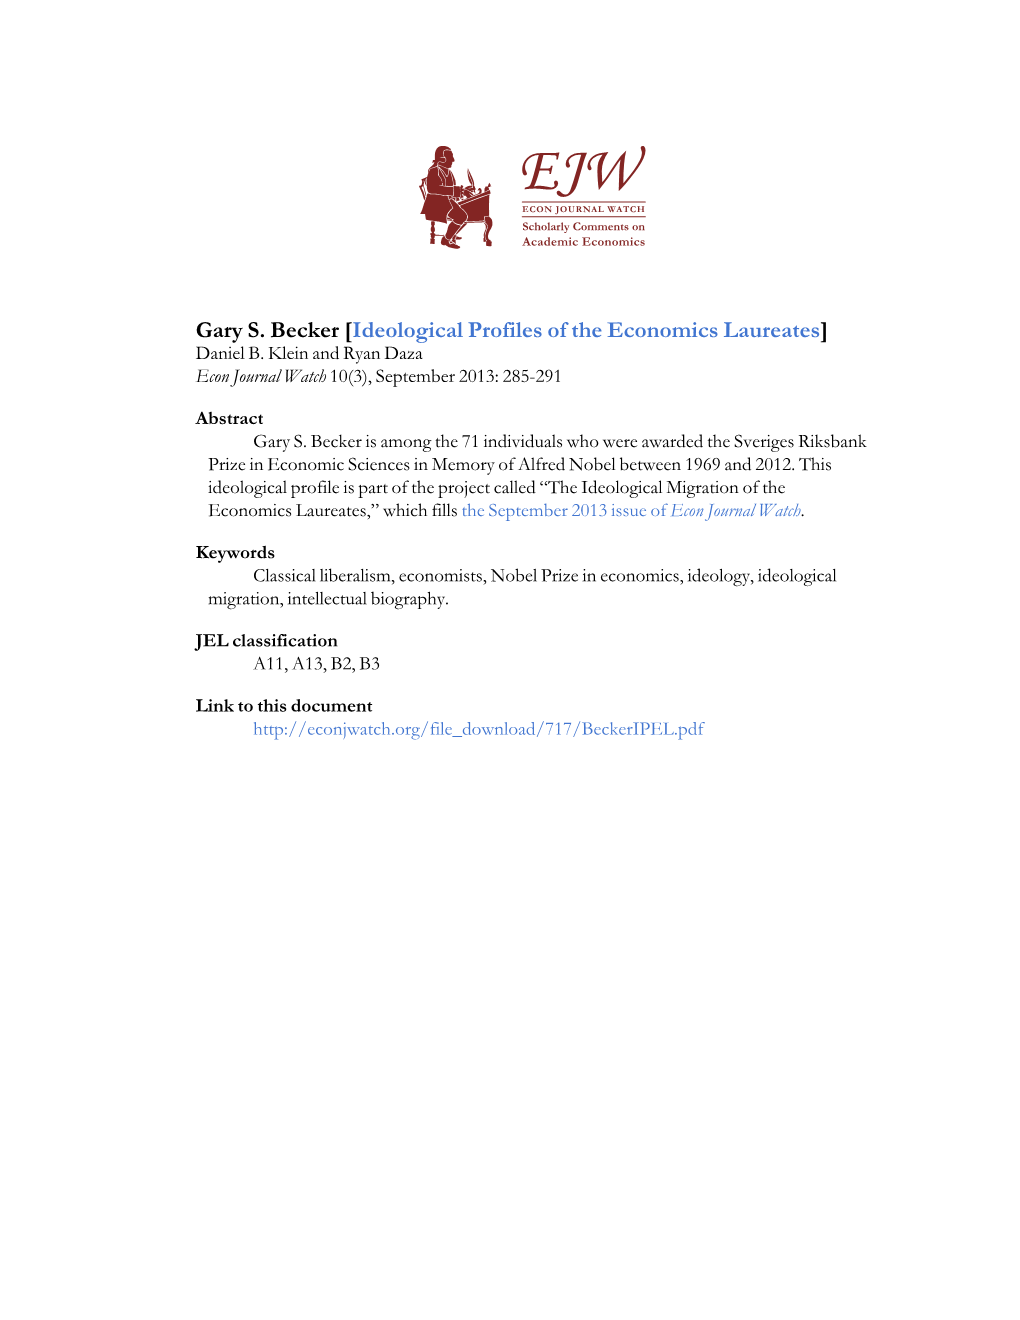 Gary S. Becker [Ideological Profiles of the Economics Laureates] Daniel B